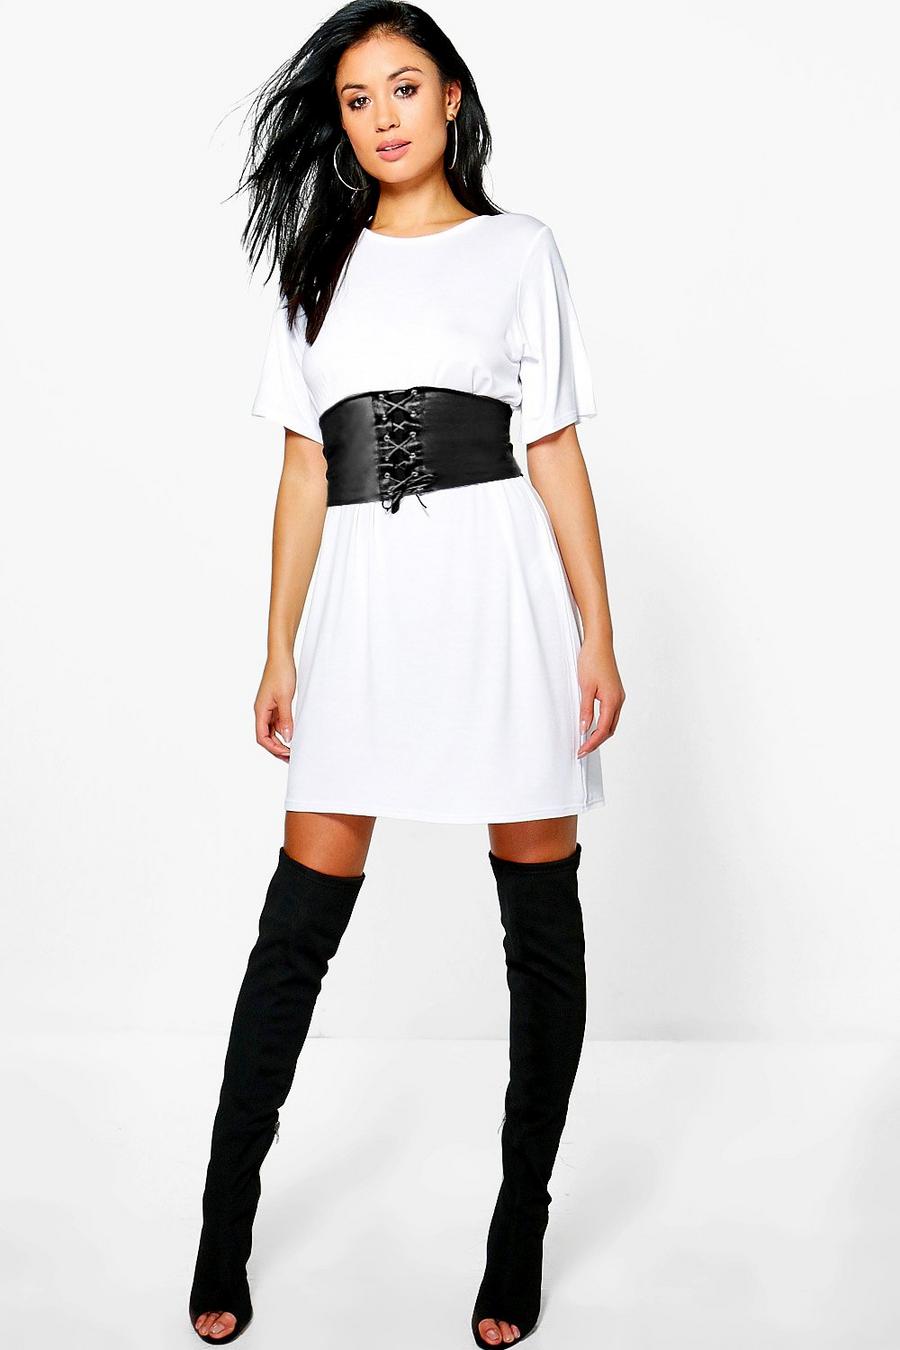 https://media.boohoo.com/i/boohoo/dzz60428_white_xl/female-white-2-in-1-corset-belt-t-shirt-dress/?w=900&qlt=default&fmt.jp2.qlt=70&fmt=auto&sm=fit